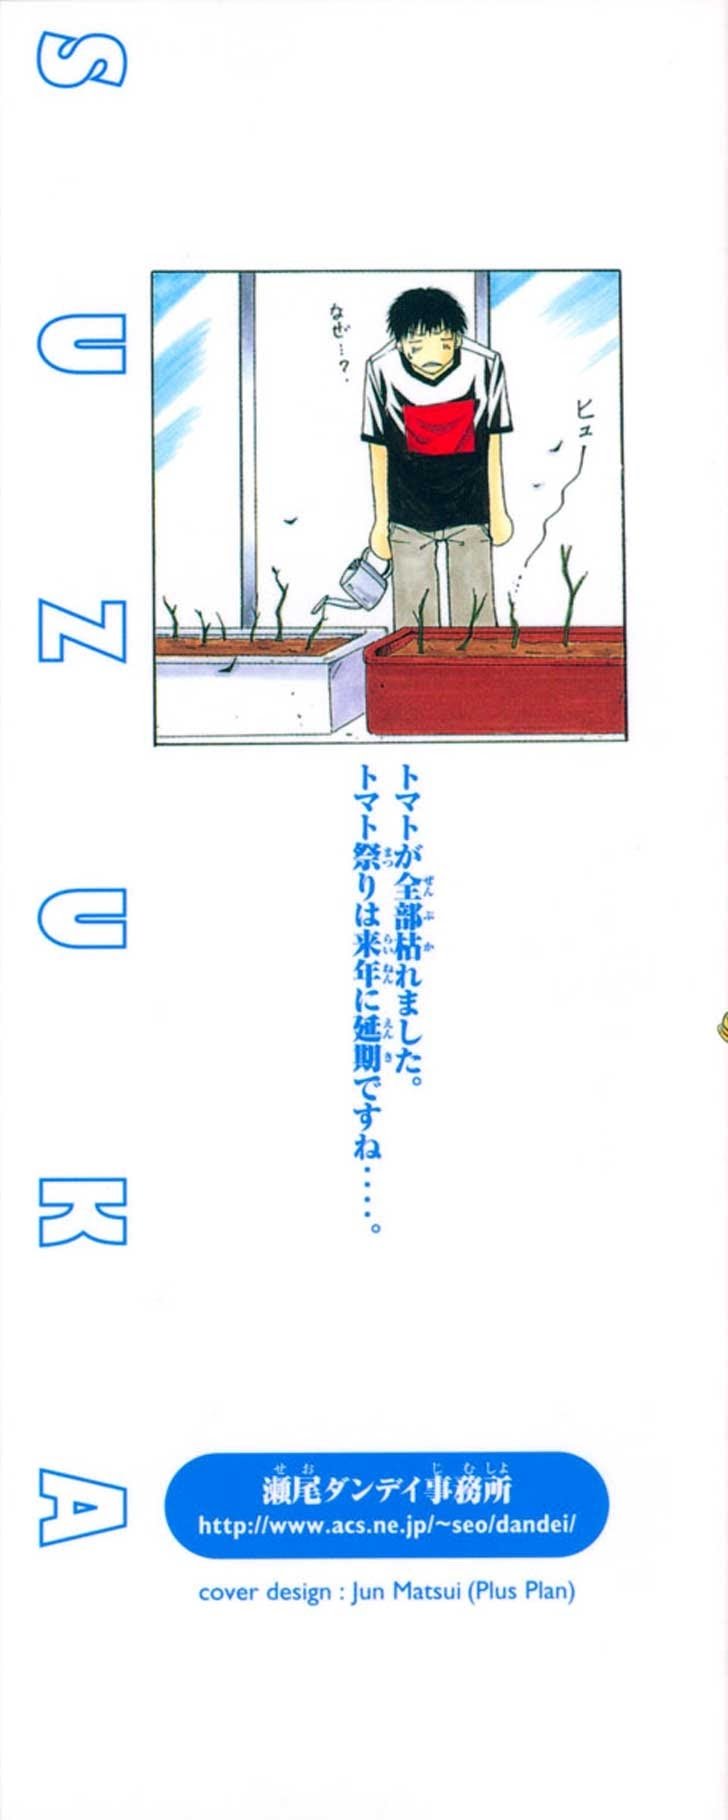 Suzuka Chapter 60